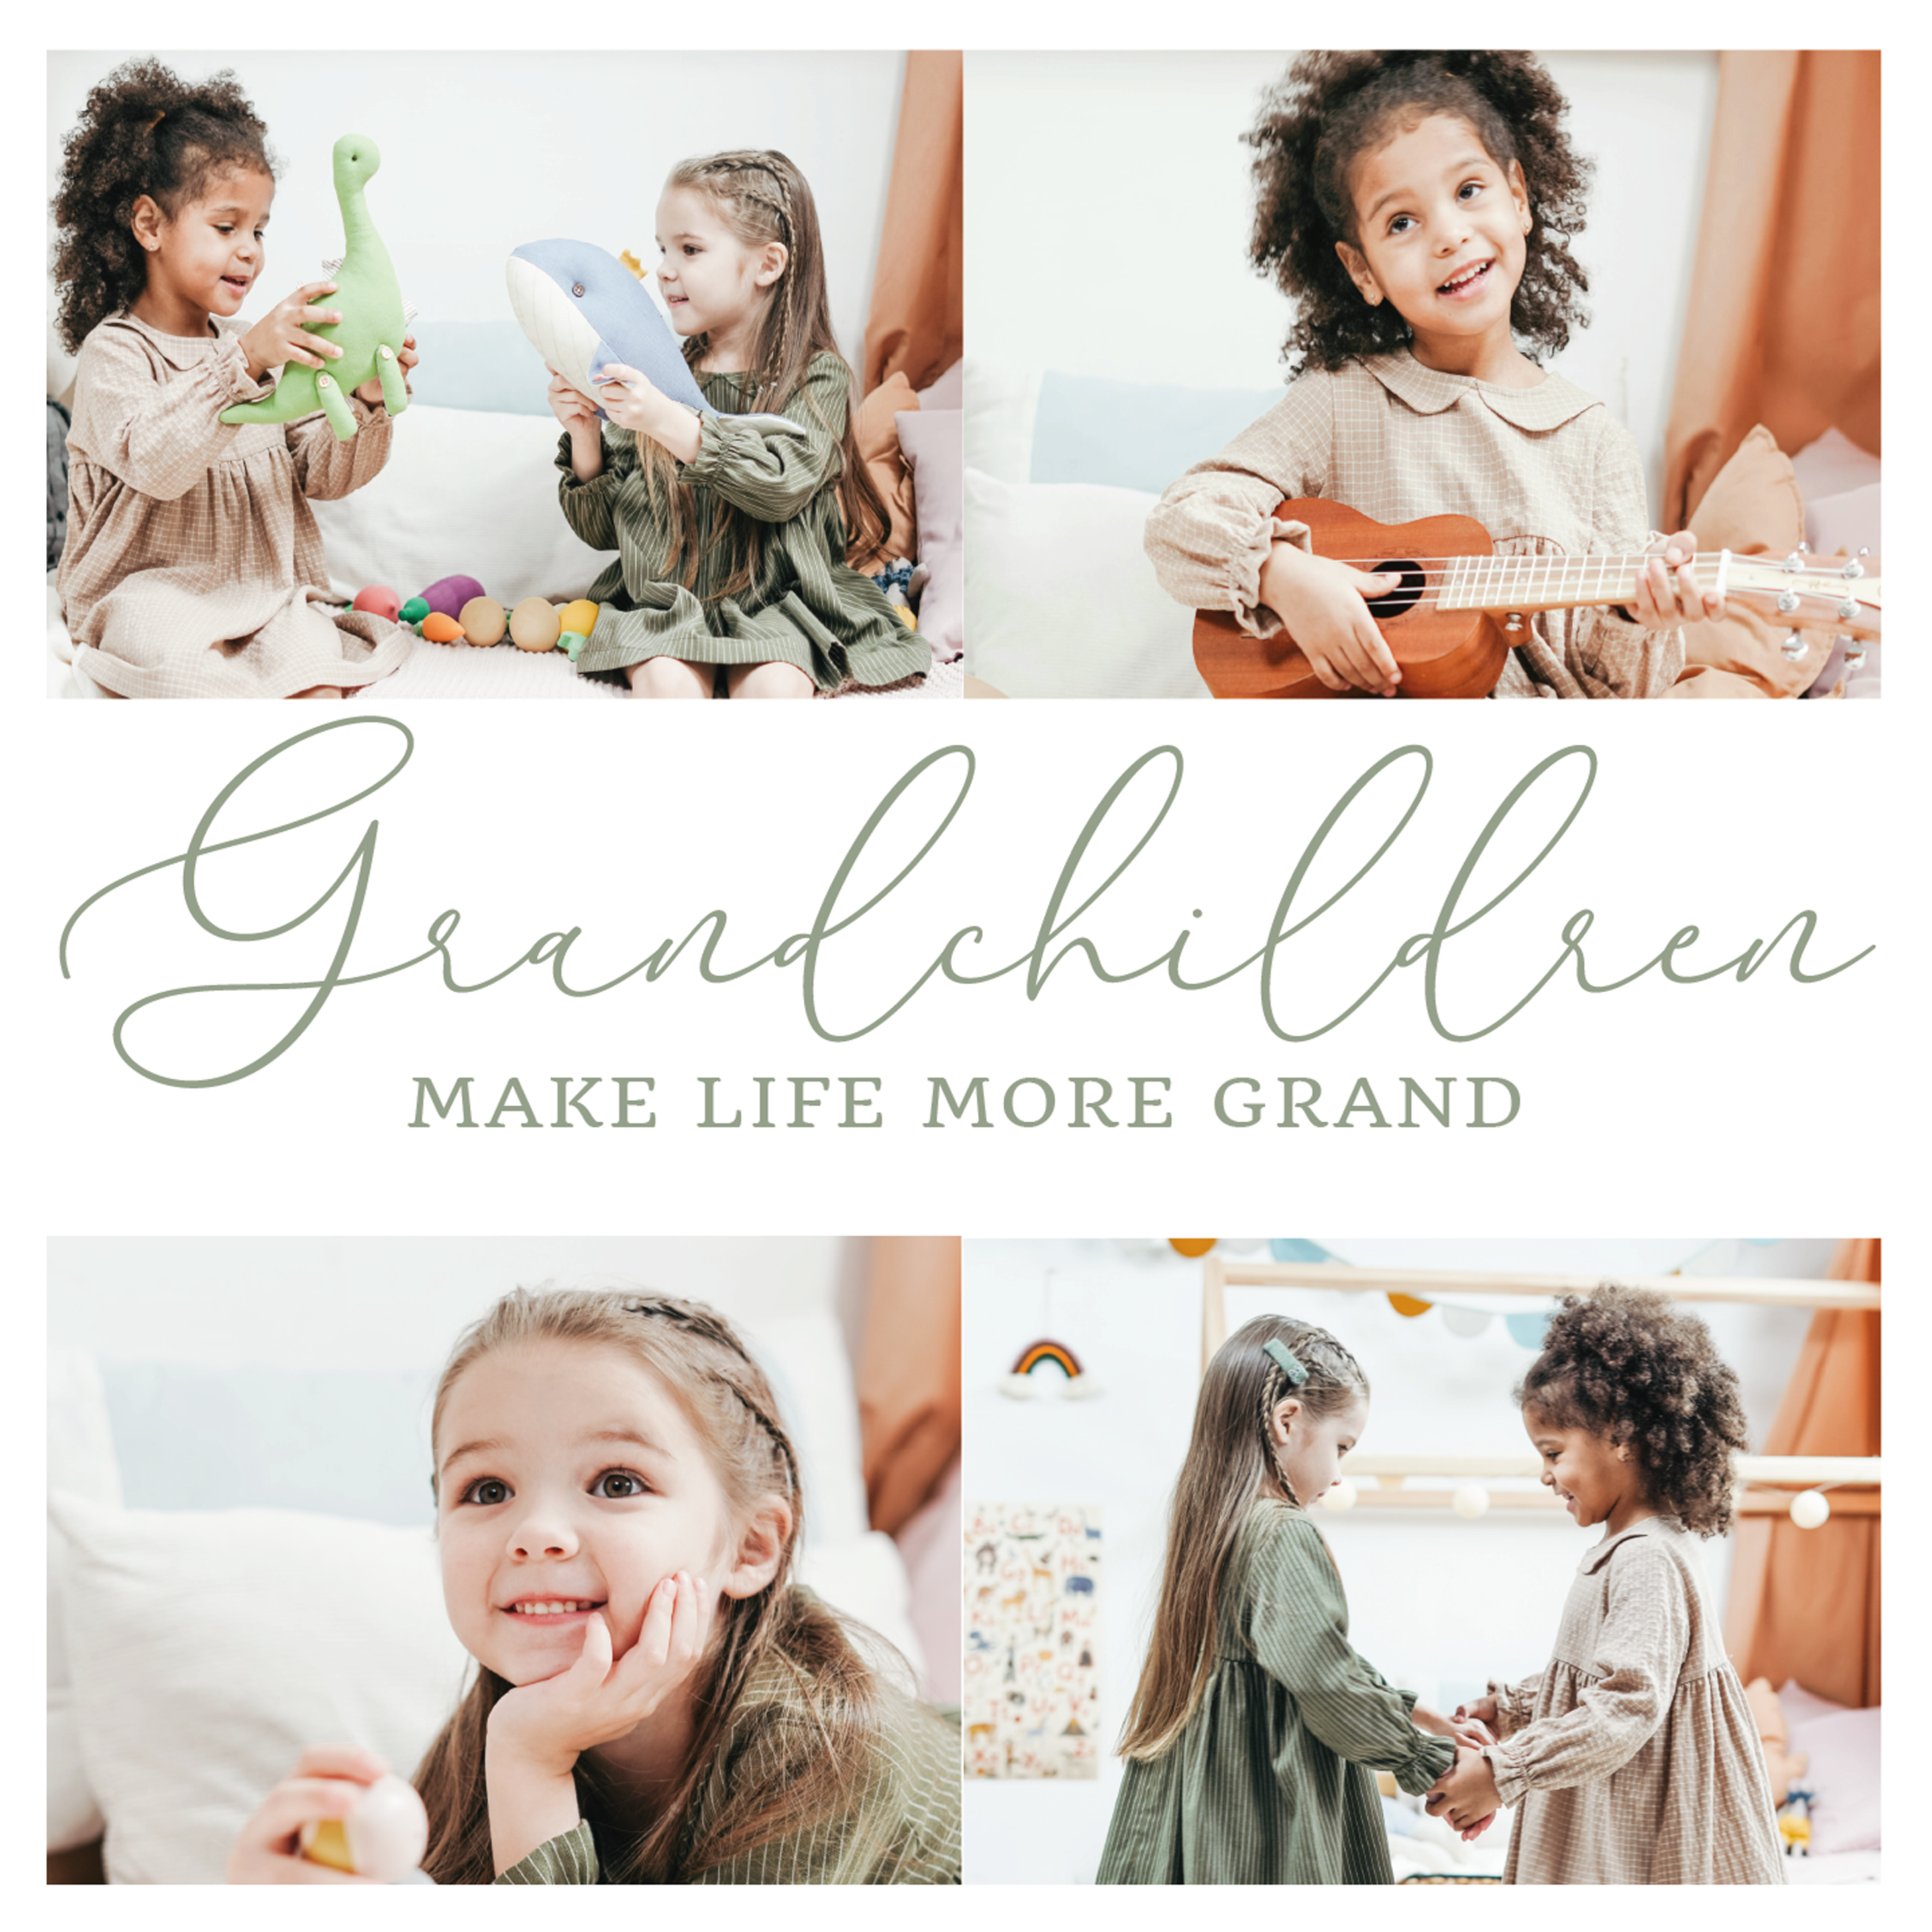 grandchildren-make-life-grand-design-theme.png